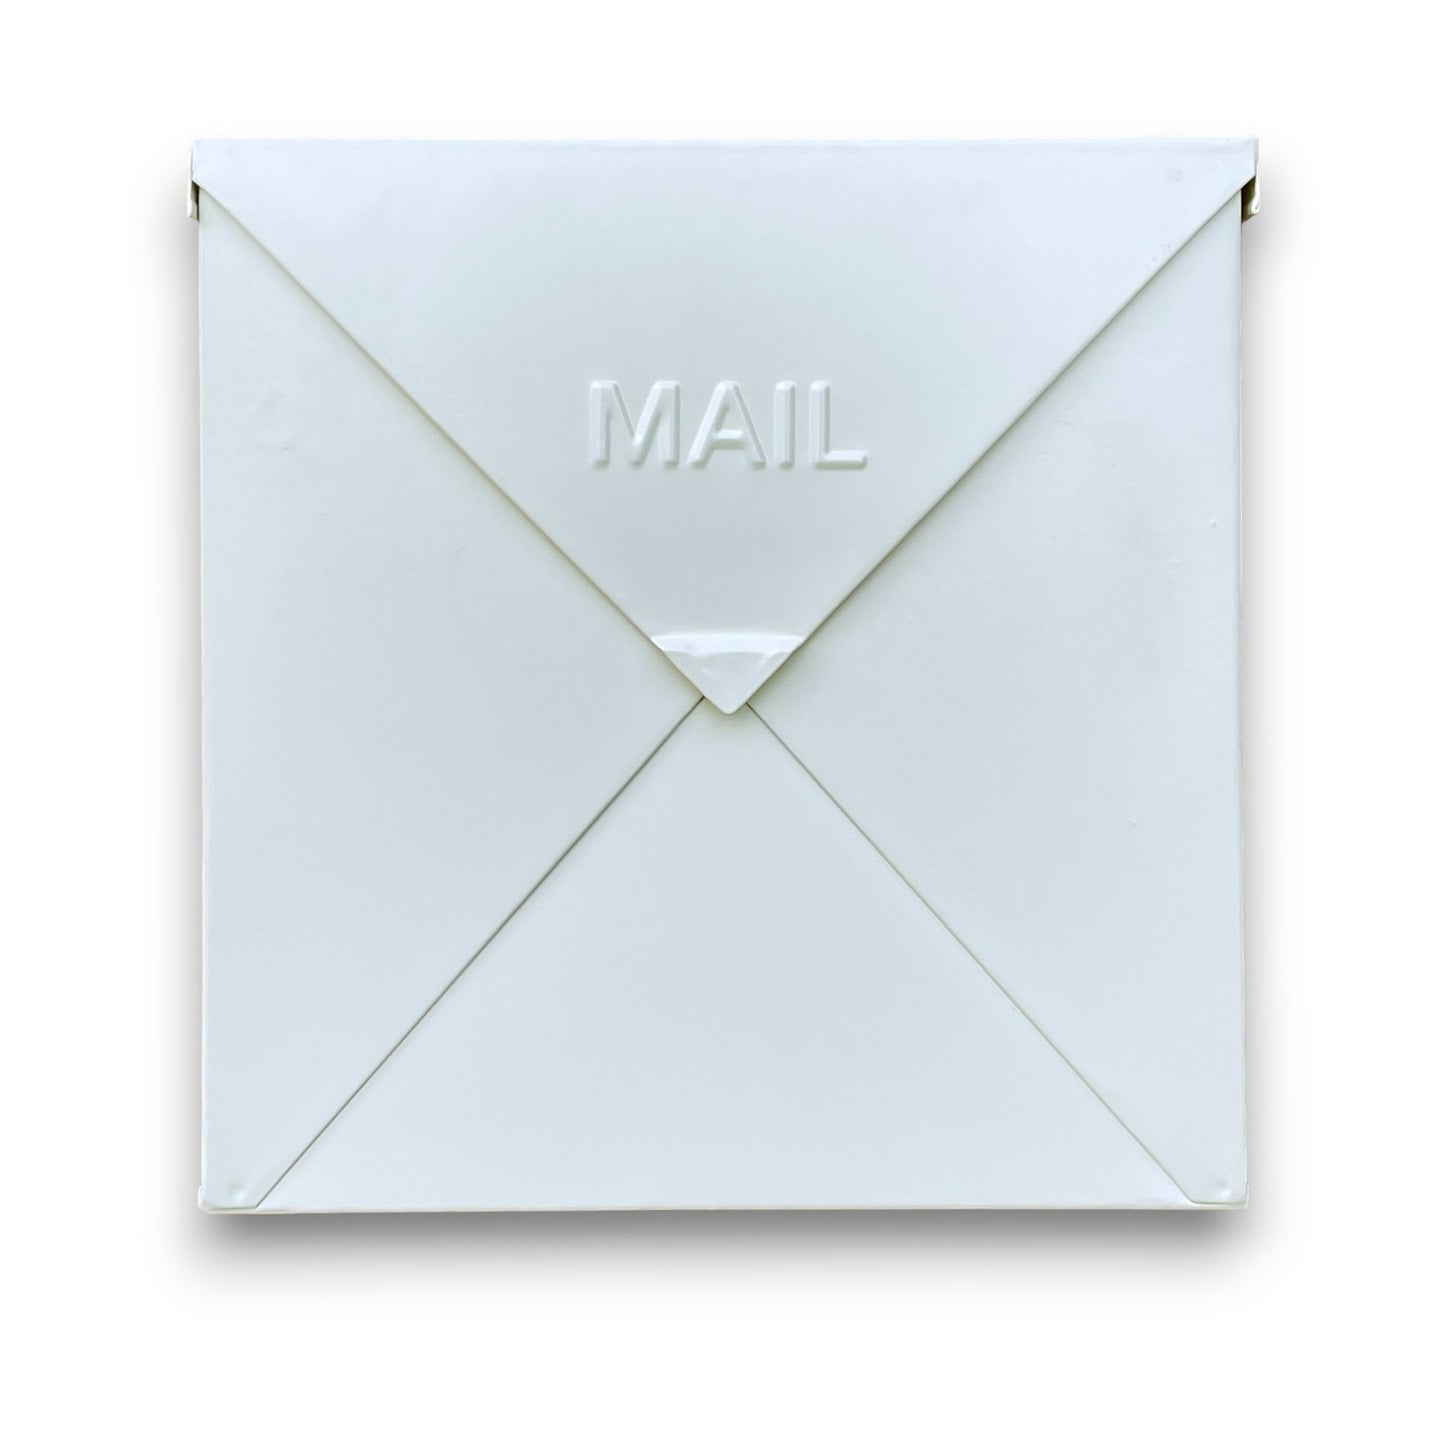 Chicago Mailbox, Off White